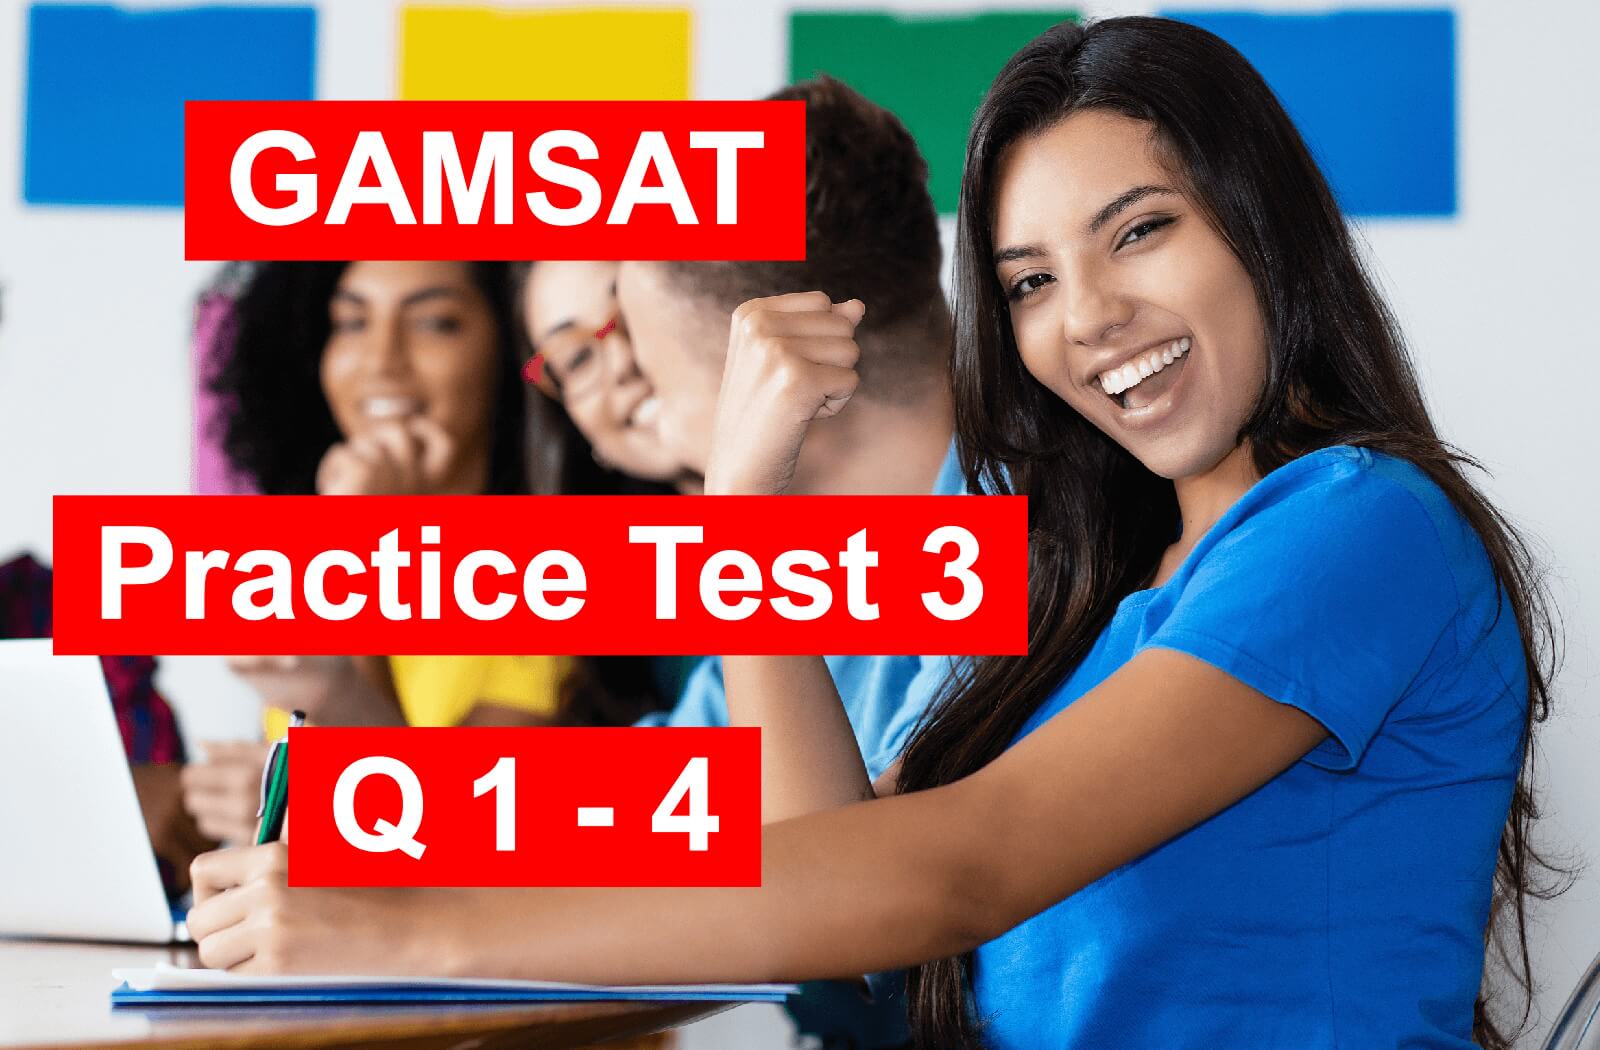 Gamsat Practice Test 3 Solutions